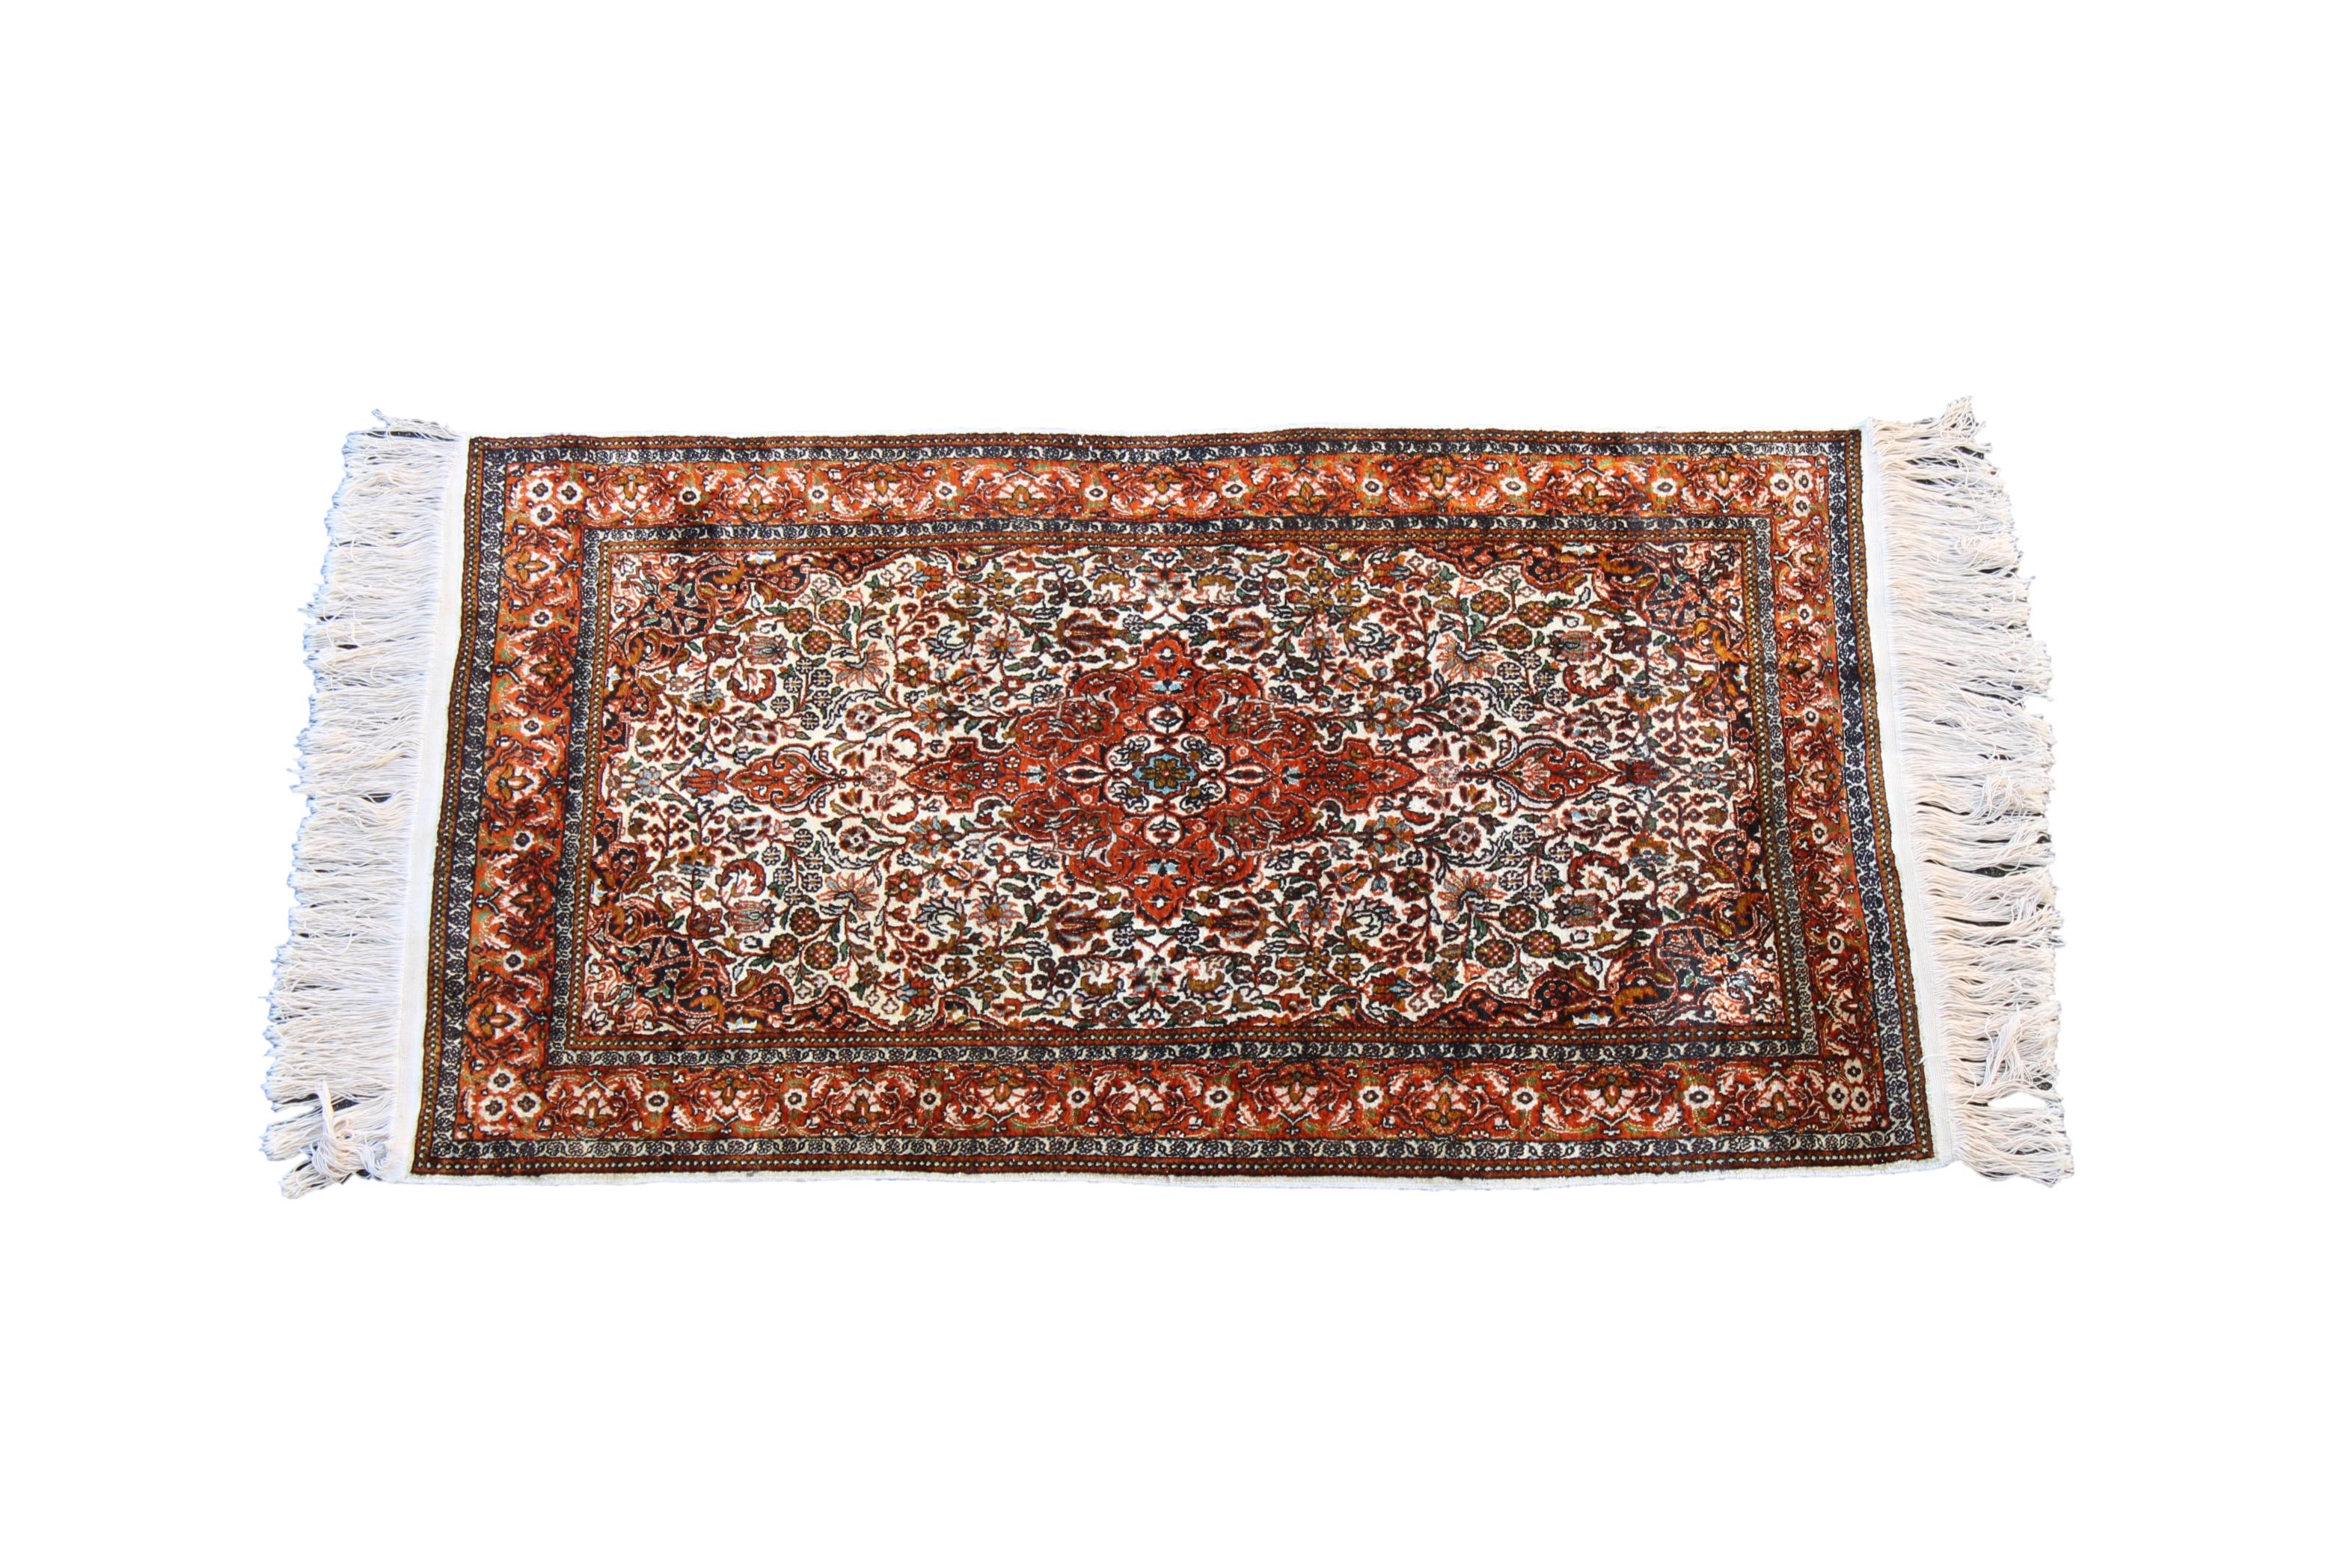 A small Kashan style silk rug